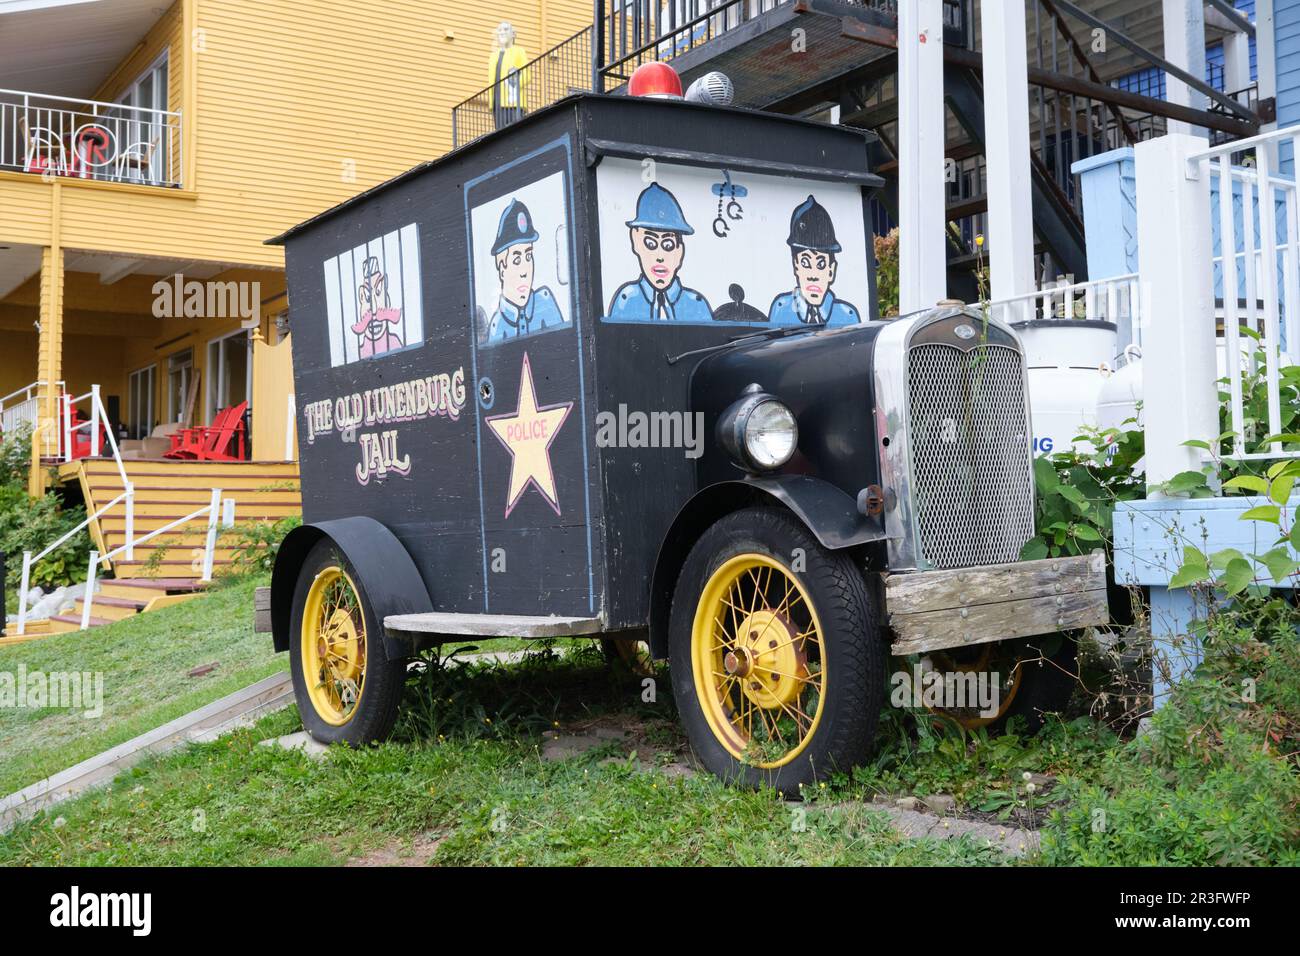 the old lunenburg jail patty wagon display on promenade Stock Photo